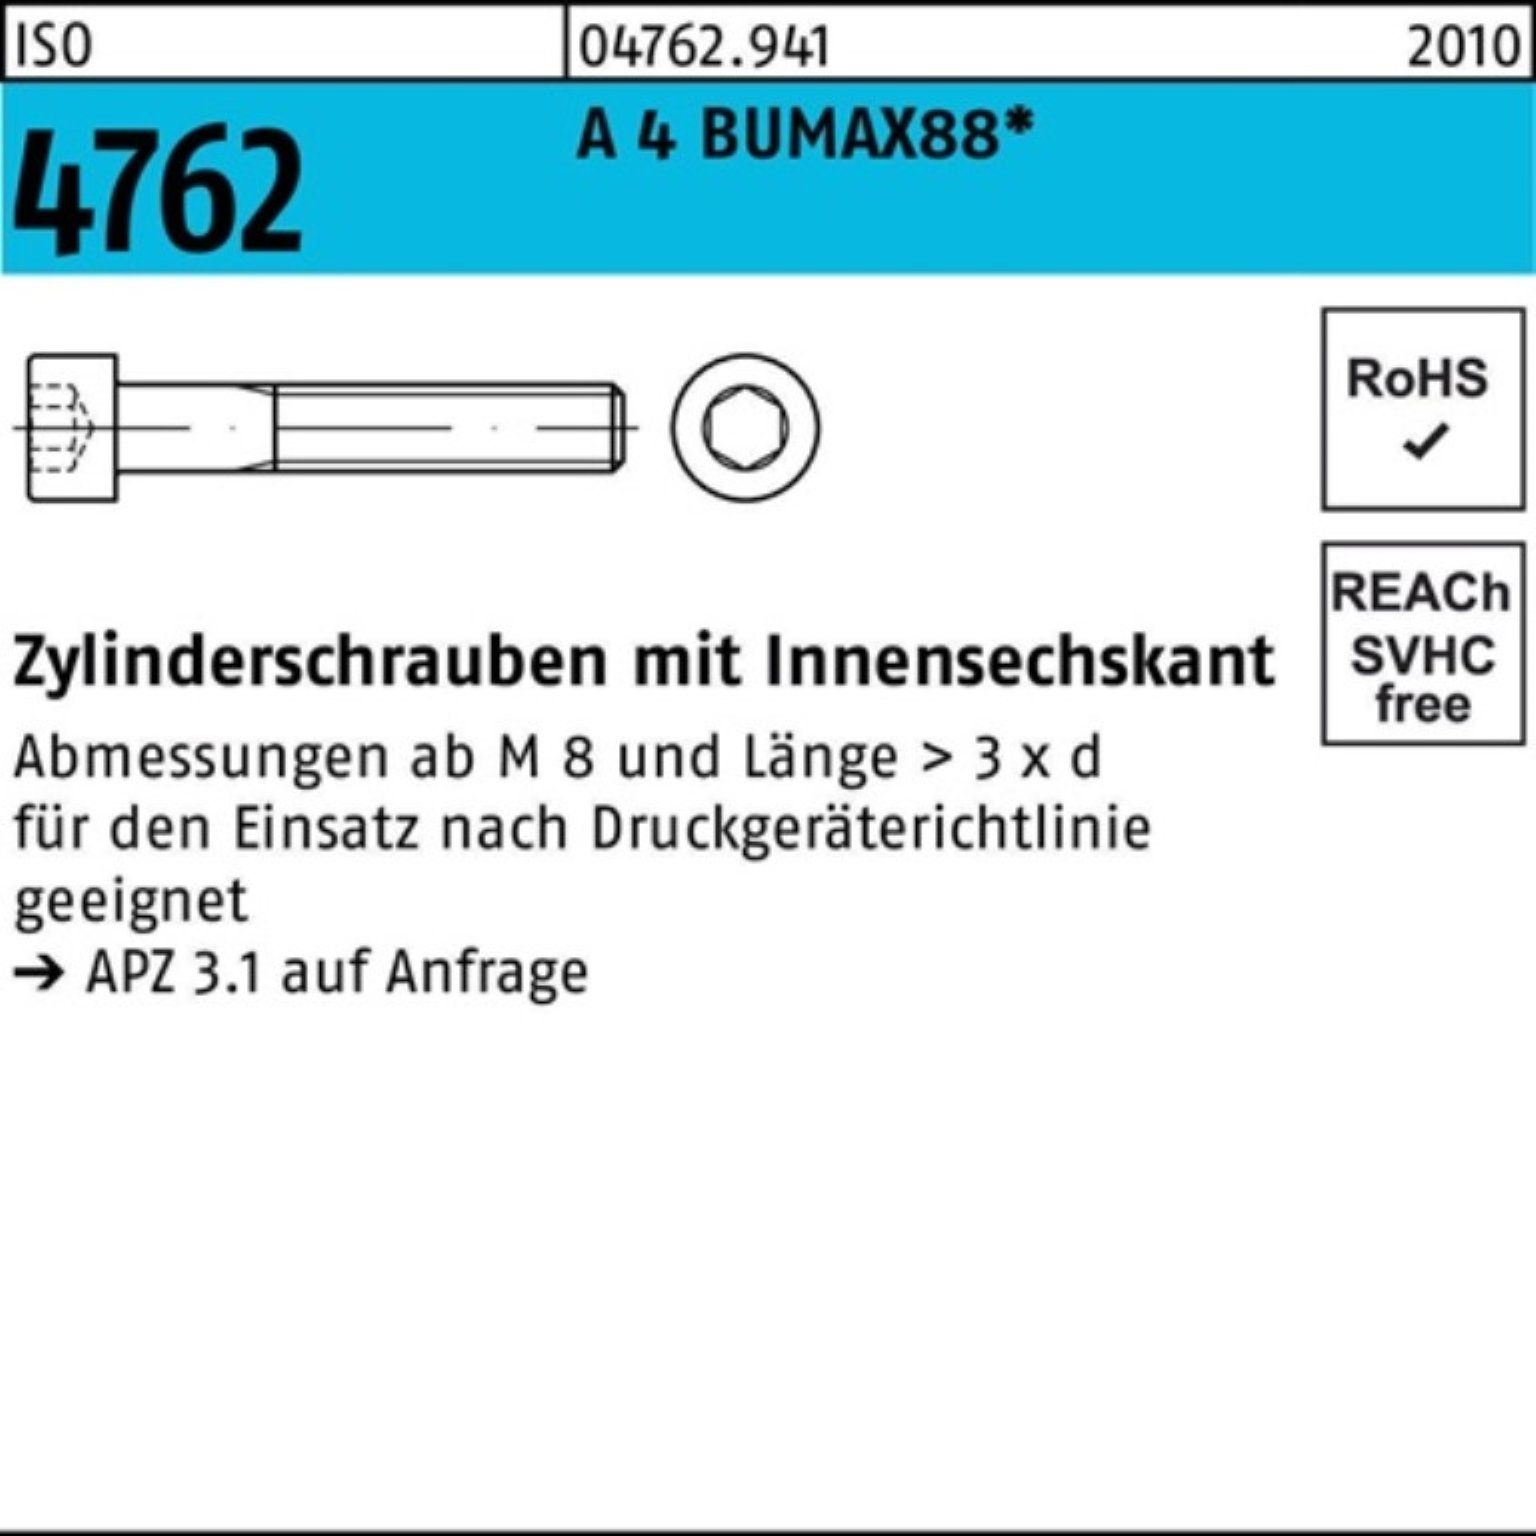 100er Bufab ISO 60 Innen-6kt Zylinderschraube Zylinderschraube M12x Pack BUMAX88 A 25 4 4762